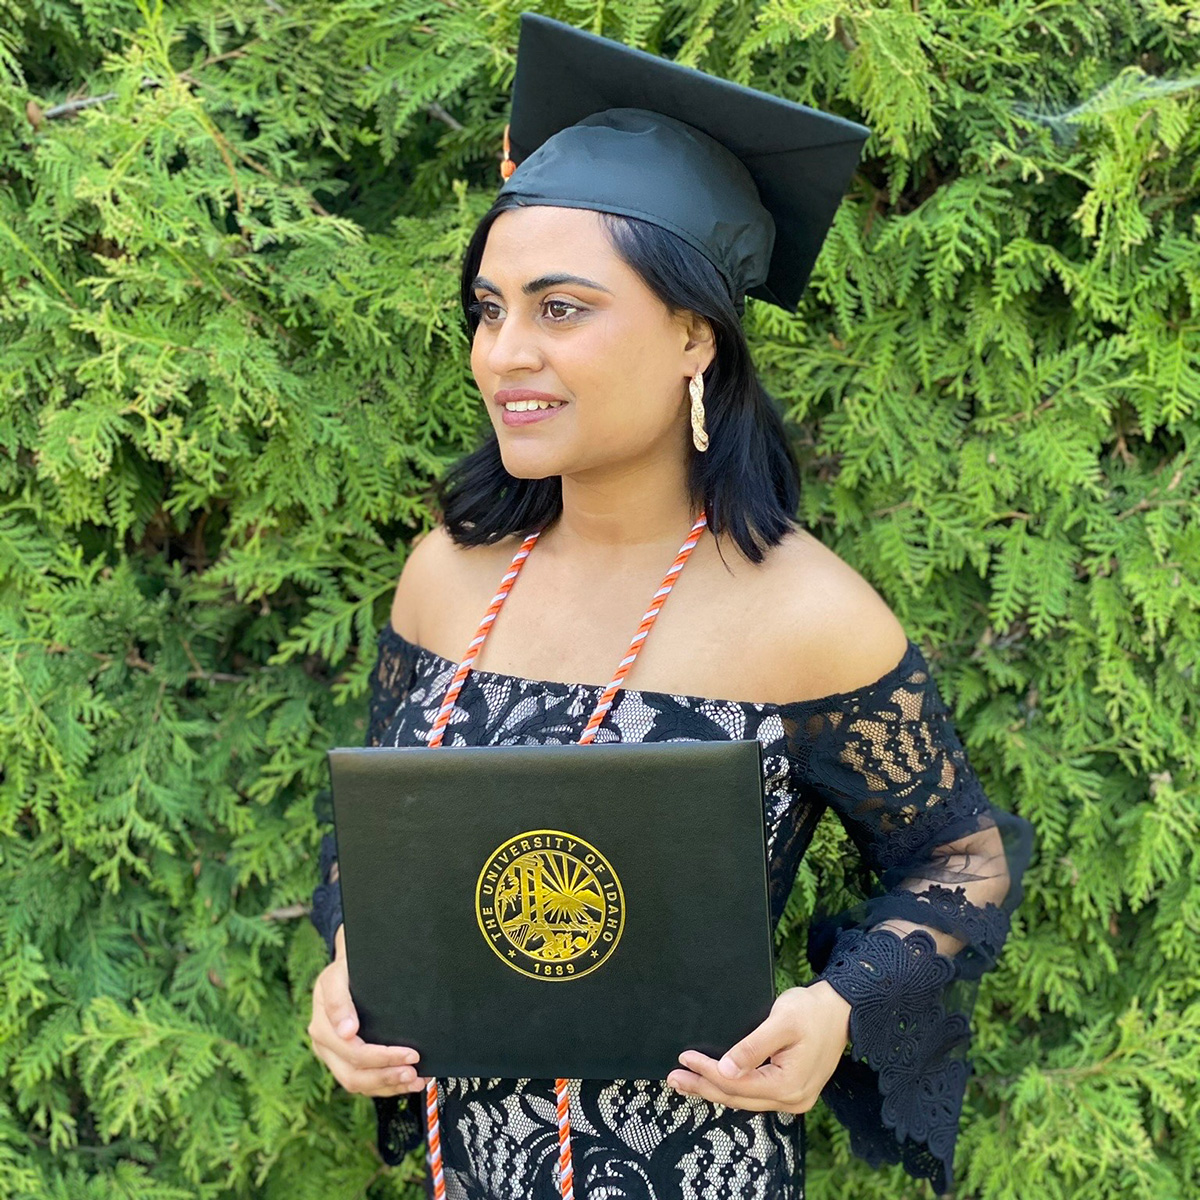 Preyusha Aryal with her diploma